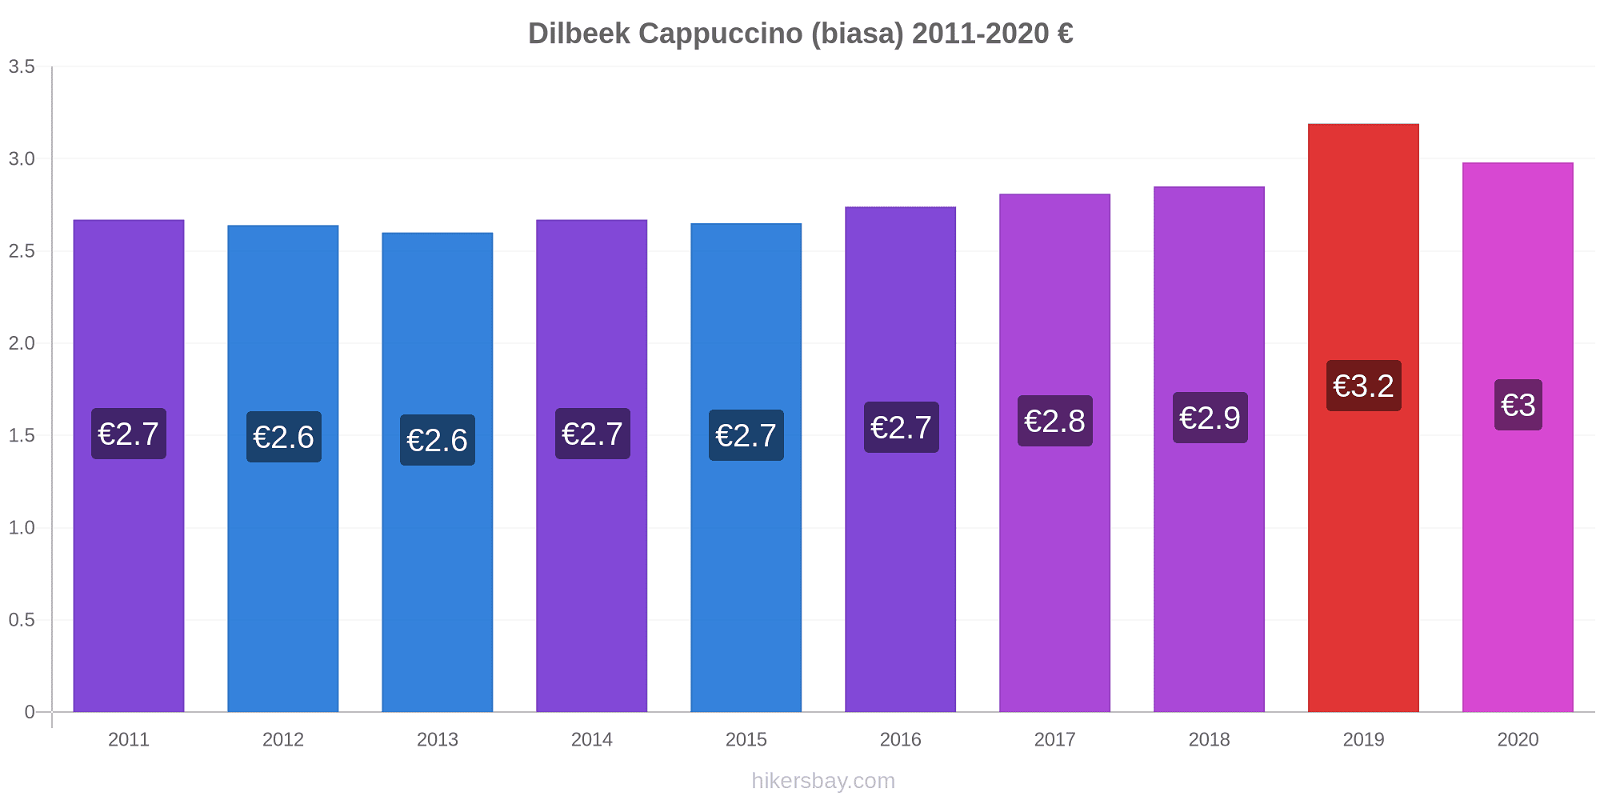 Dilbeek perubahan harga Cappuccino (biasa) hikersbay.com